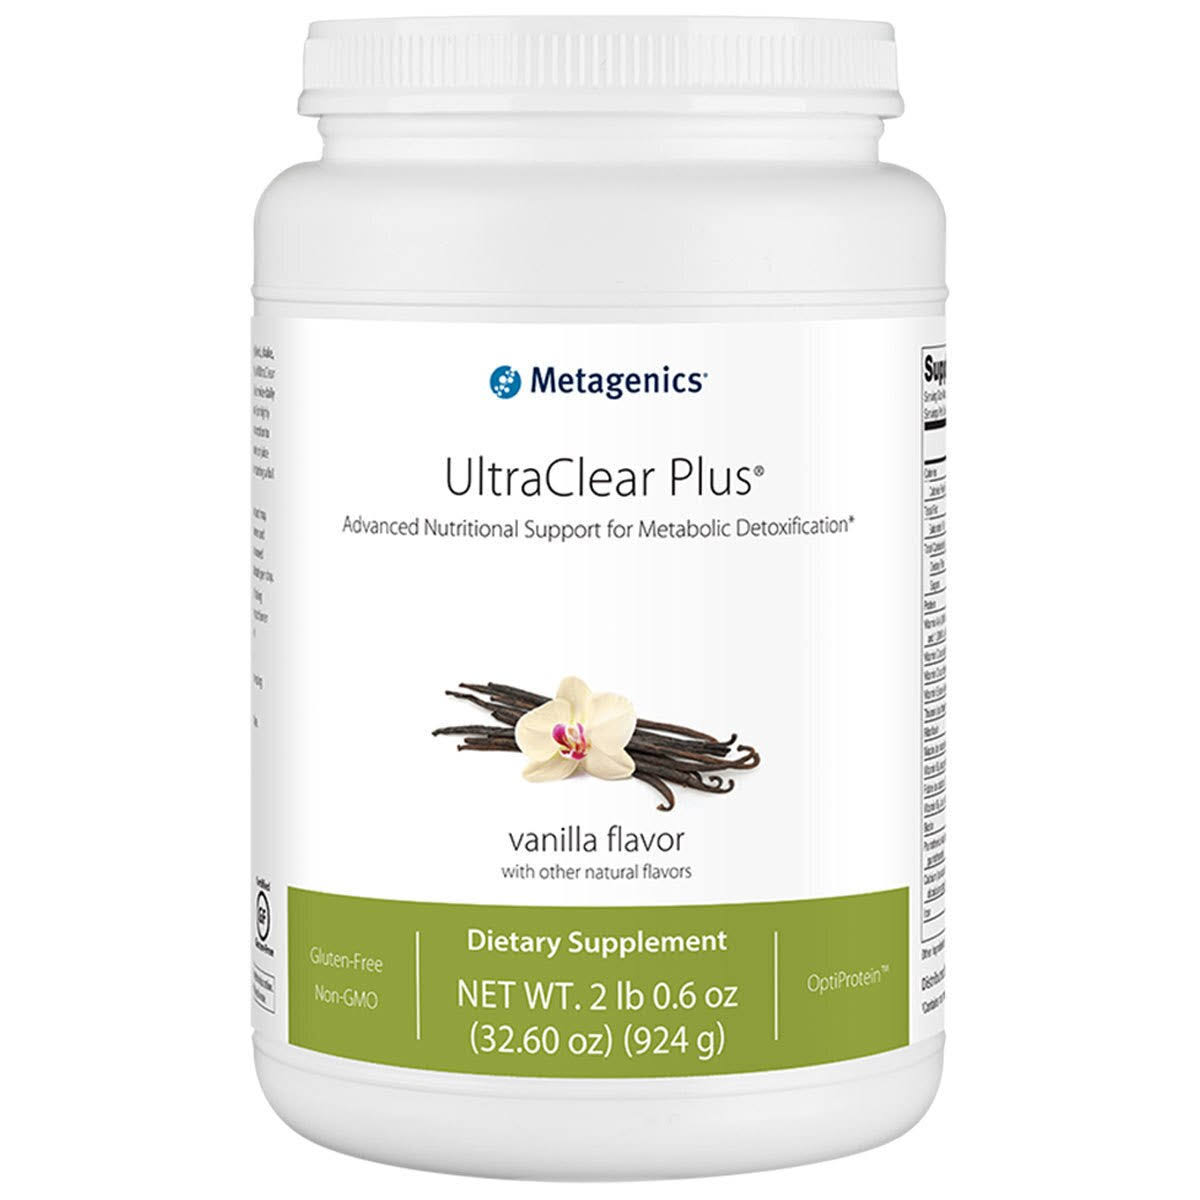 Metagenics UltraClear Plus Natural Vanilla Dietary Supplement - 924g